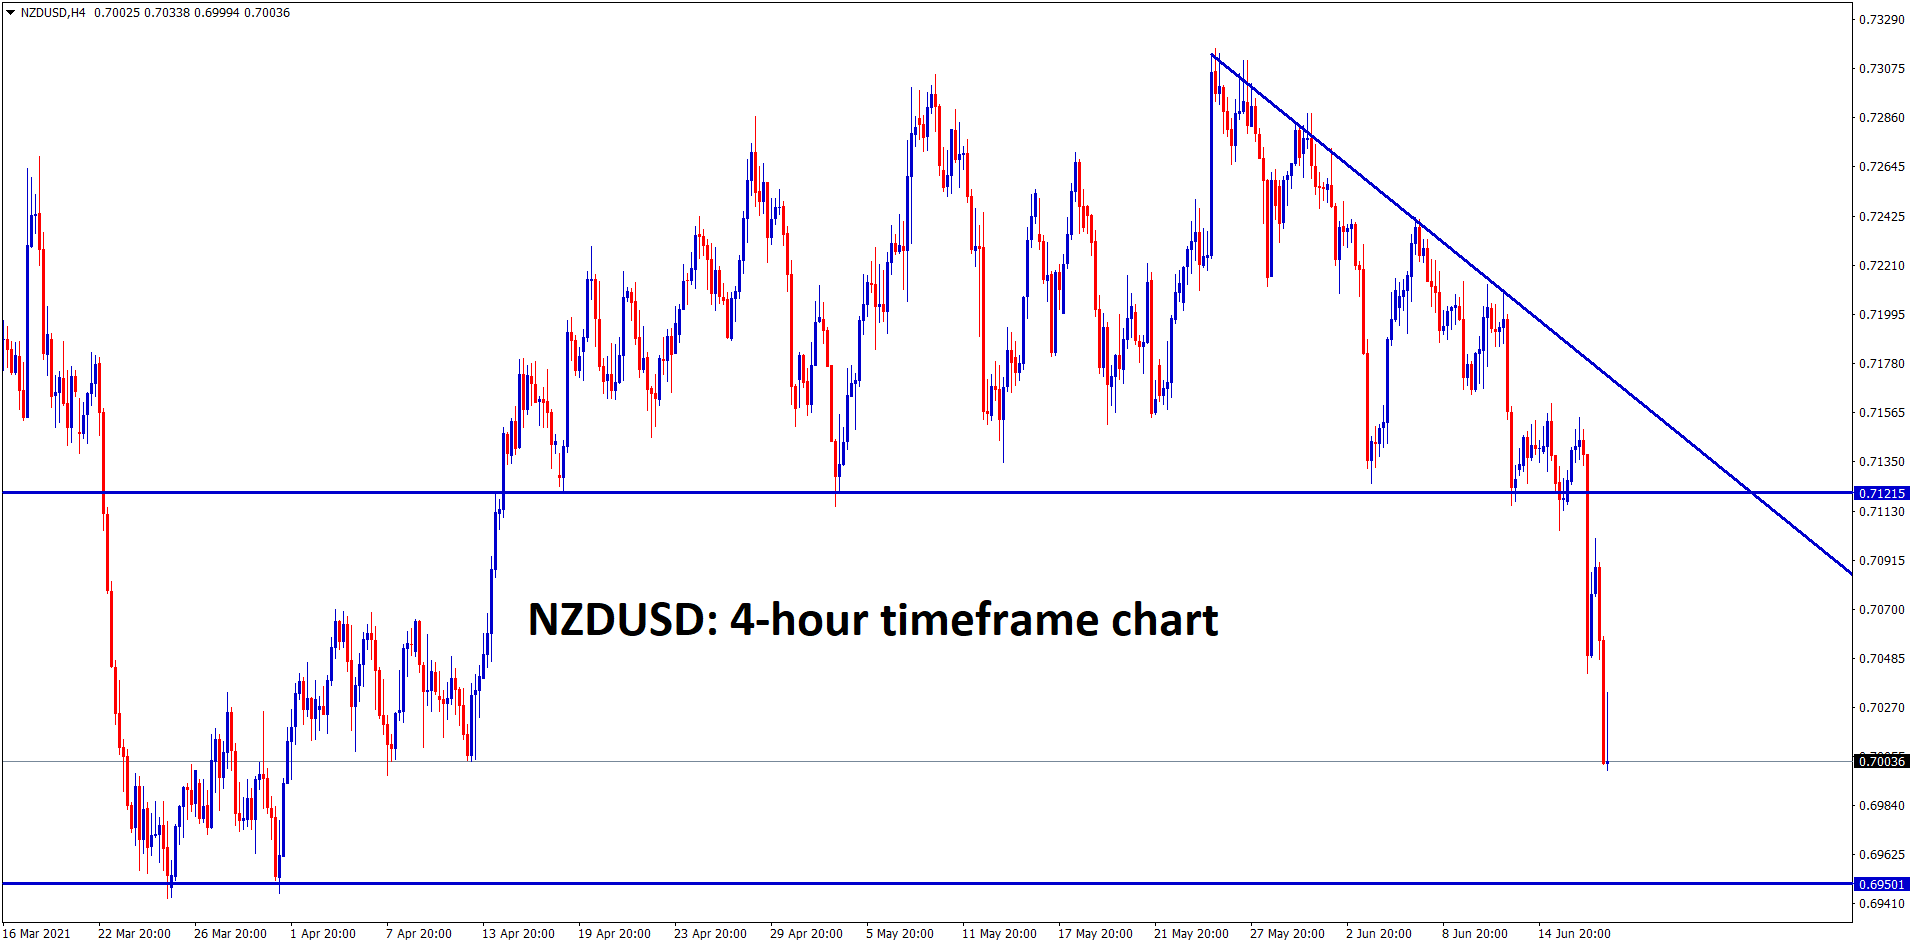 NZDUSD has broken the bottom level of the Descending Triangle pattern